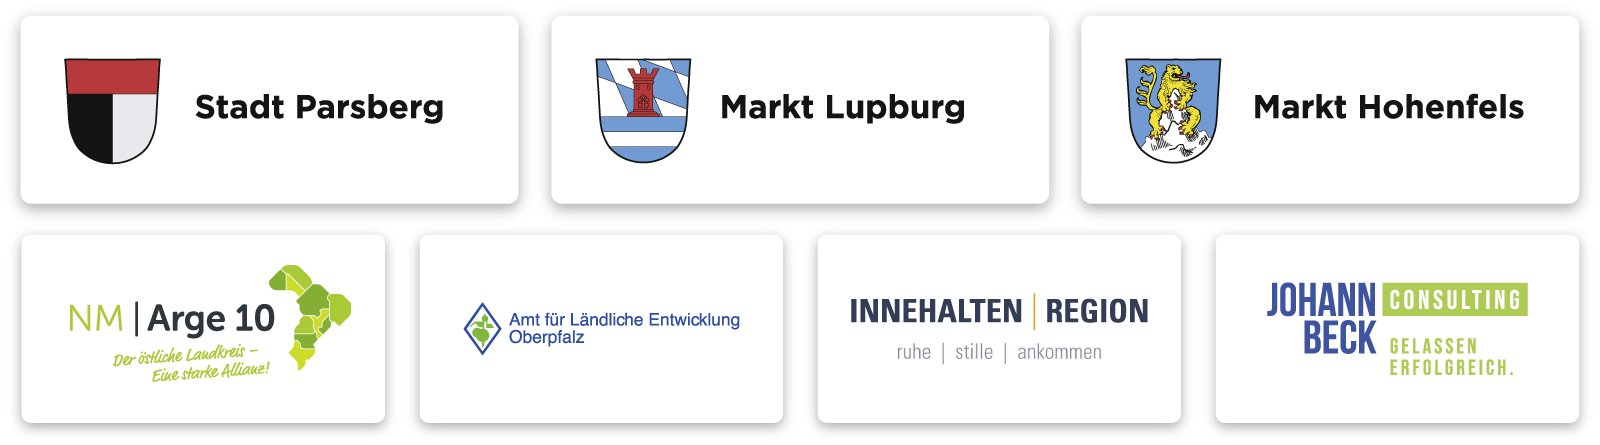 CONTEMPLATIO Partner Wegstrecke Parsberg - Lupburg - Hohenfels